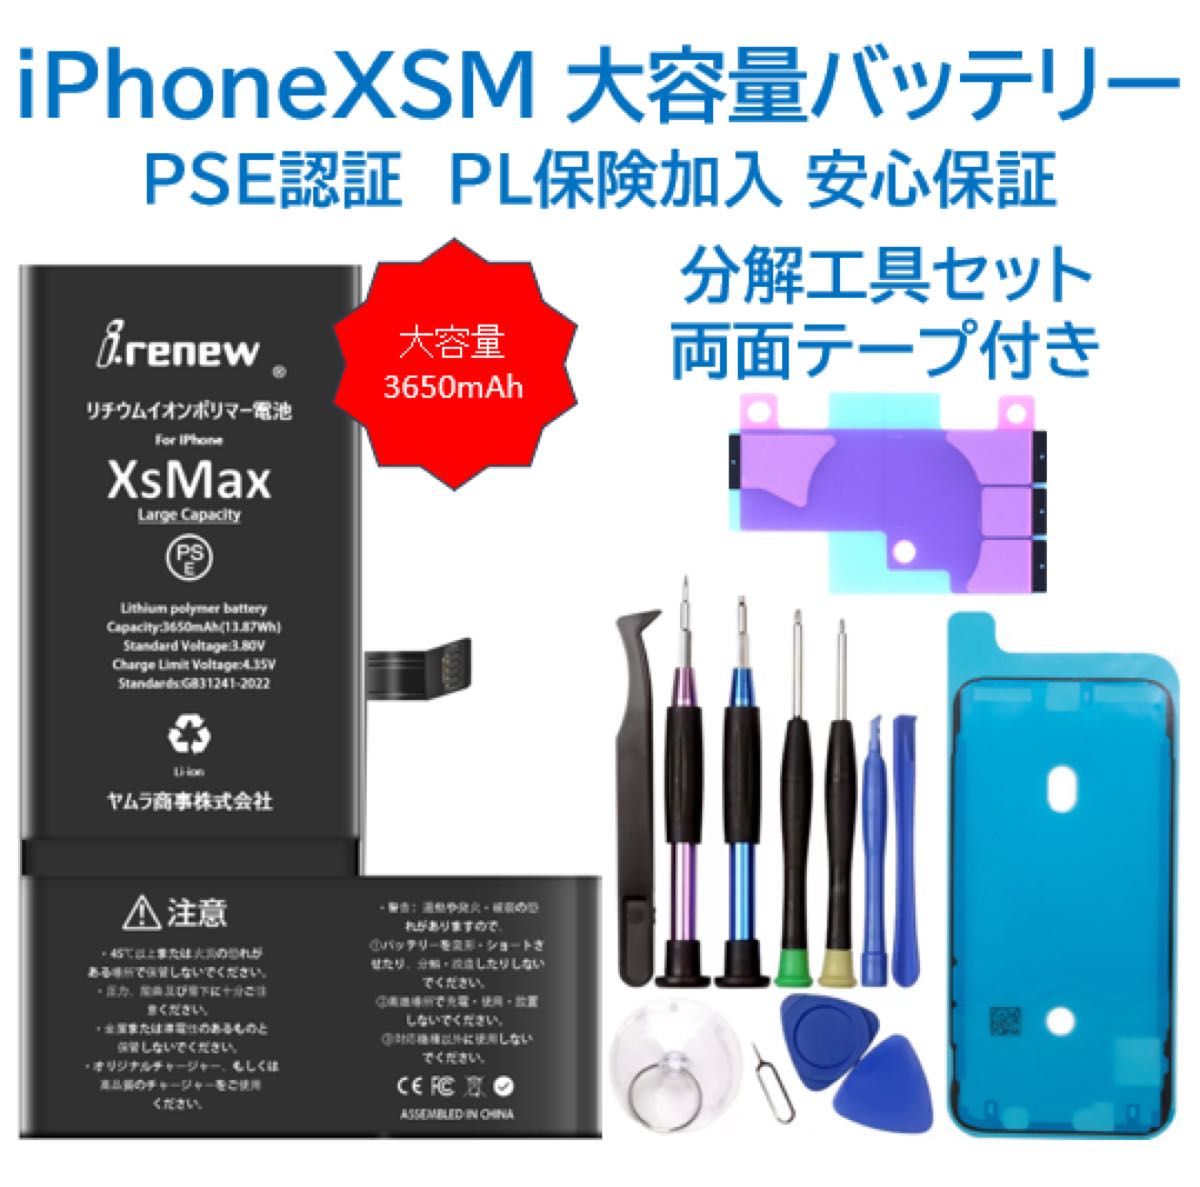 【新品】iPhoneXSM 大容量バッテリー 交換用 PSE認証済 工具・保証付